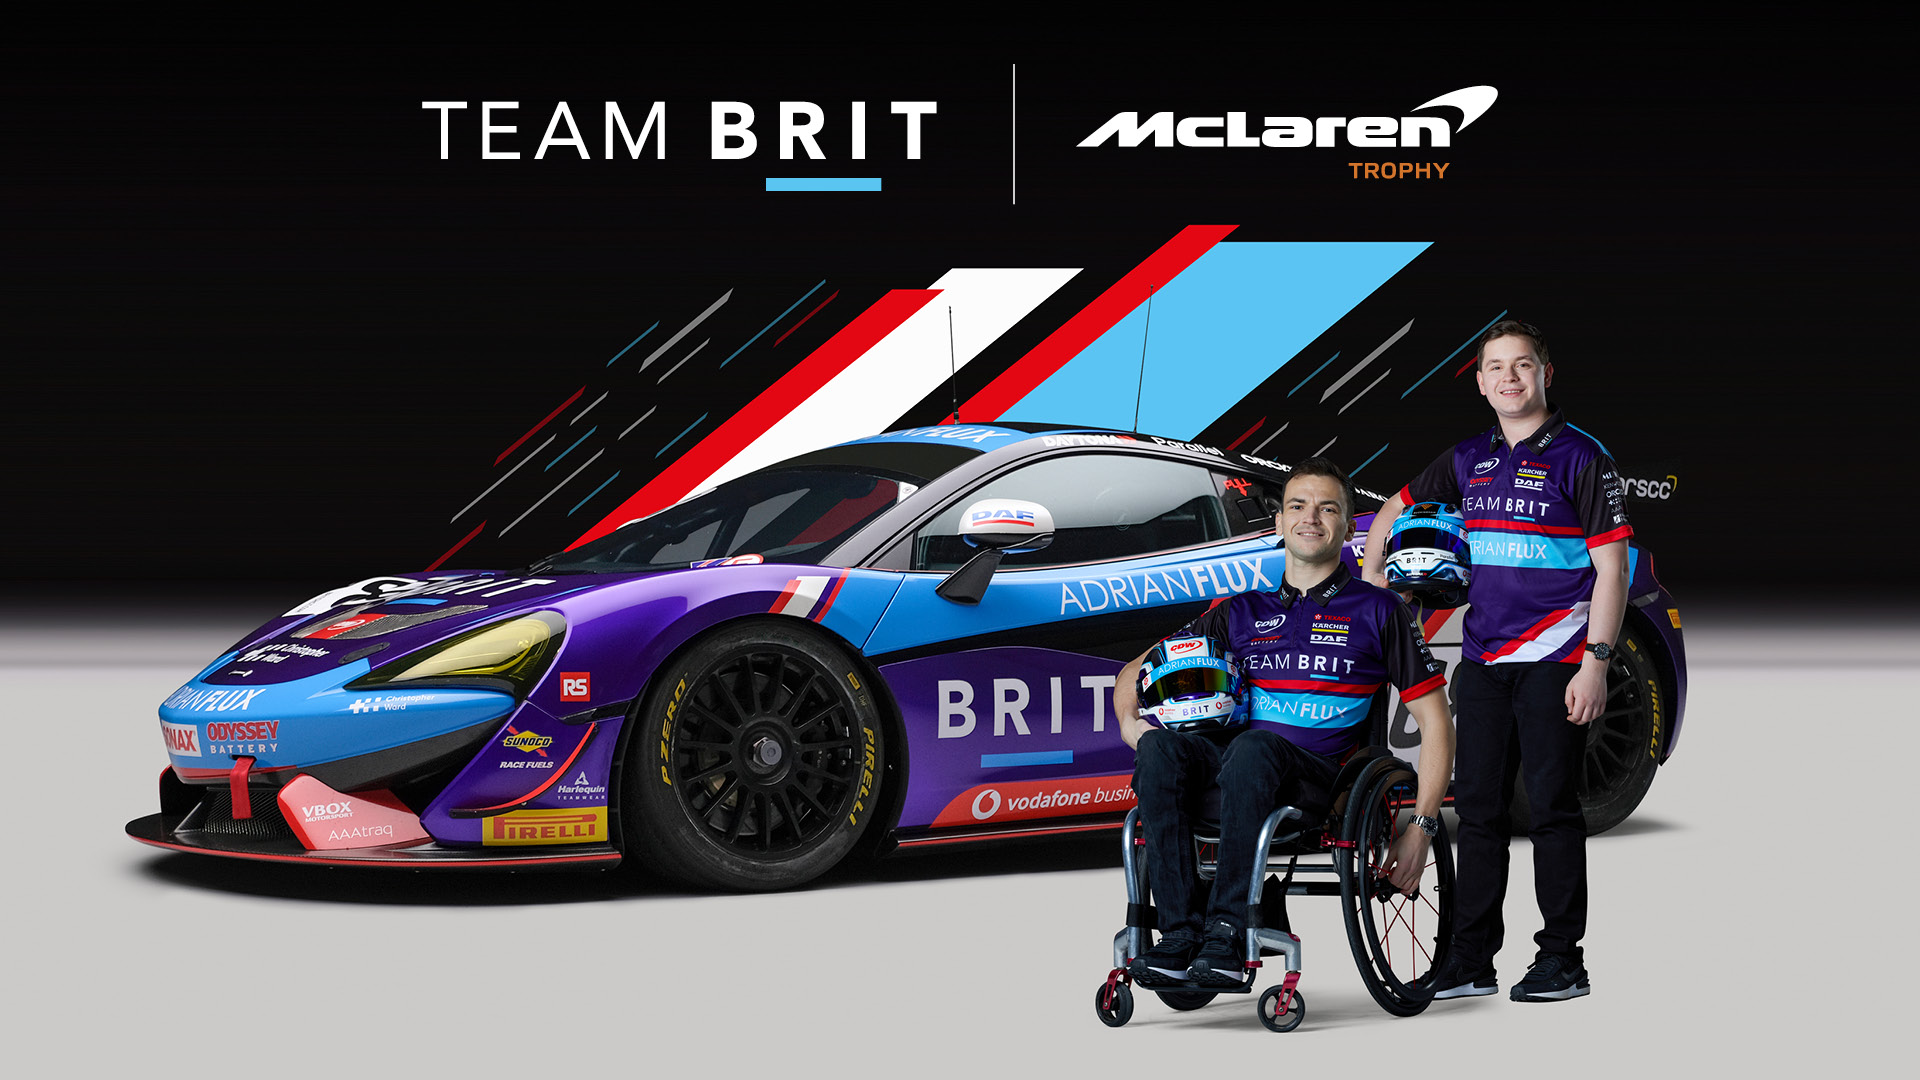 <strong>Team BRIT announces McLaren Trophy Entry</strong>